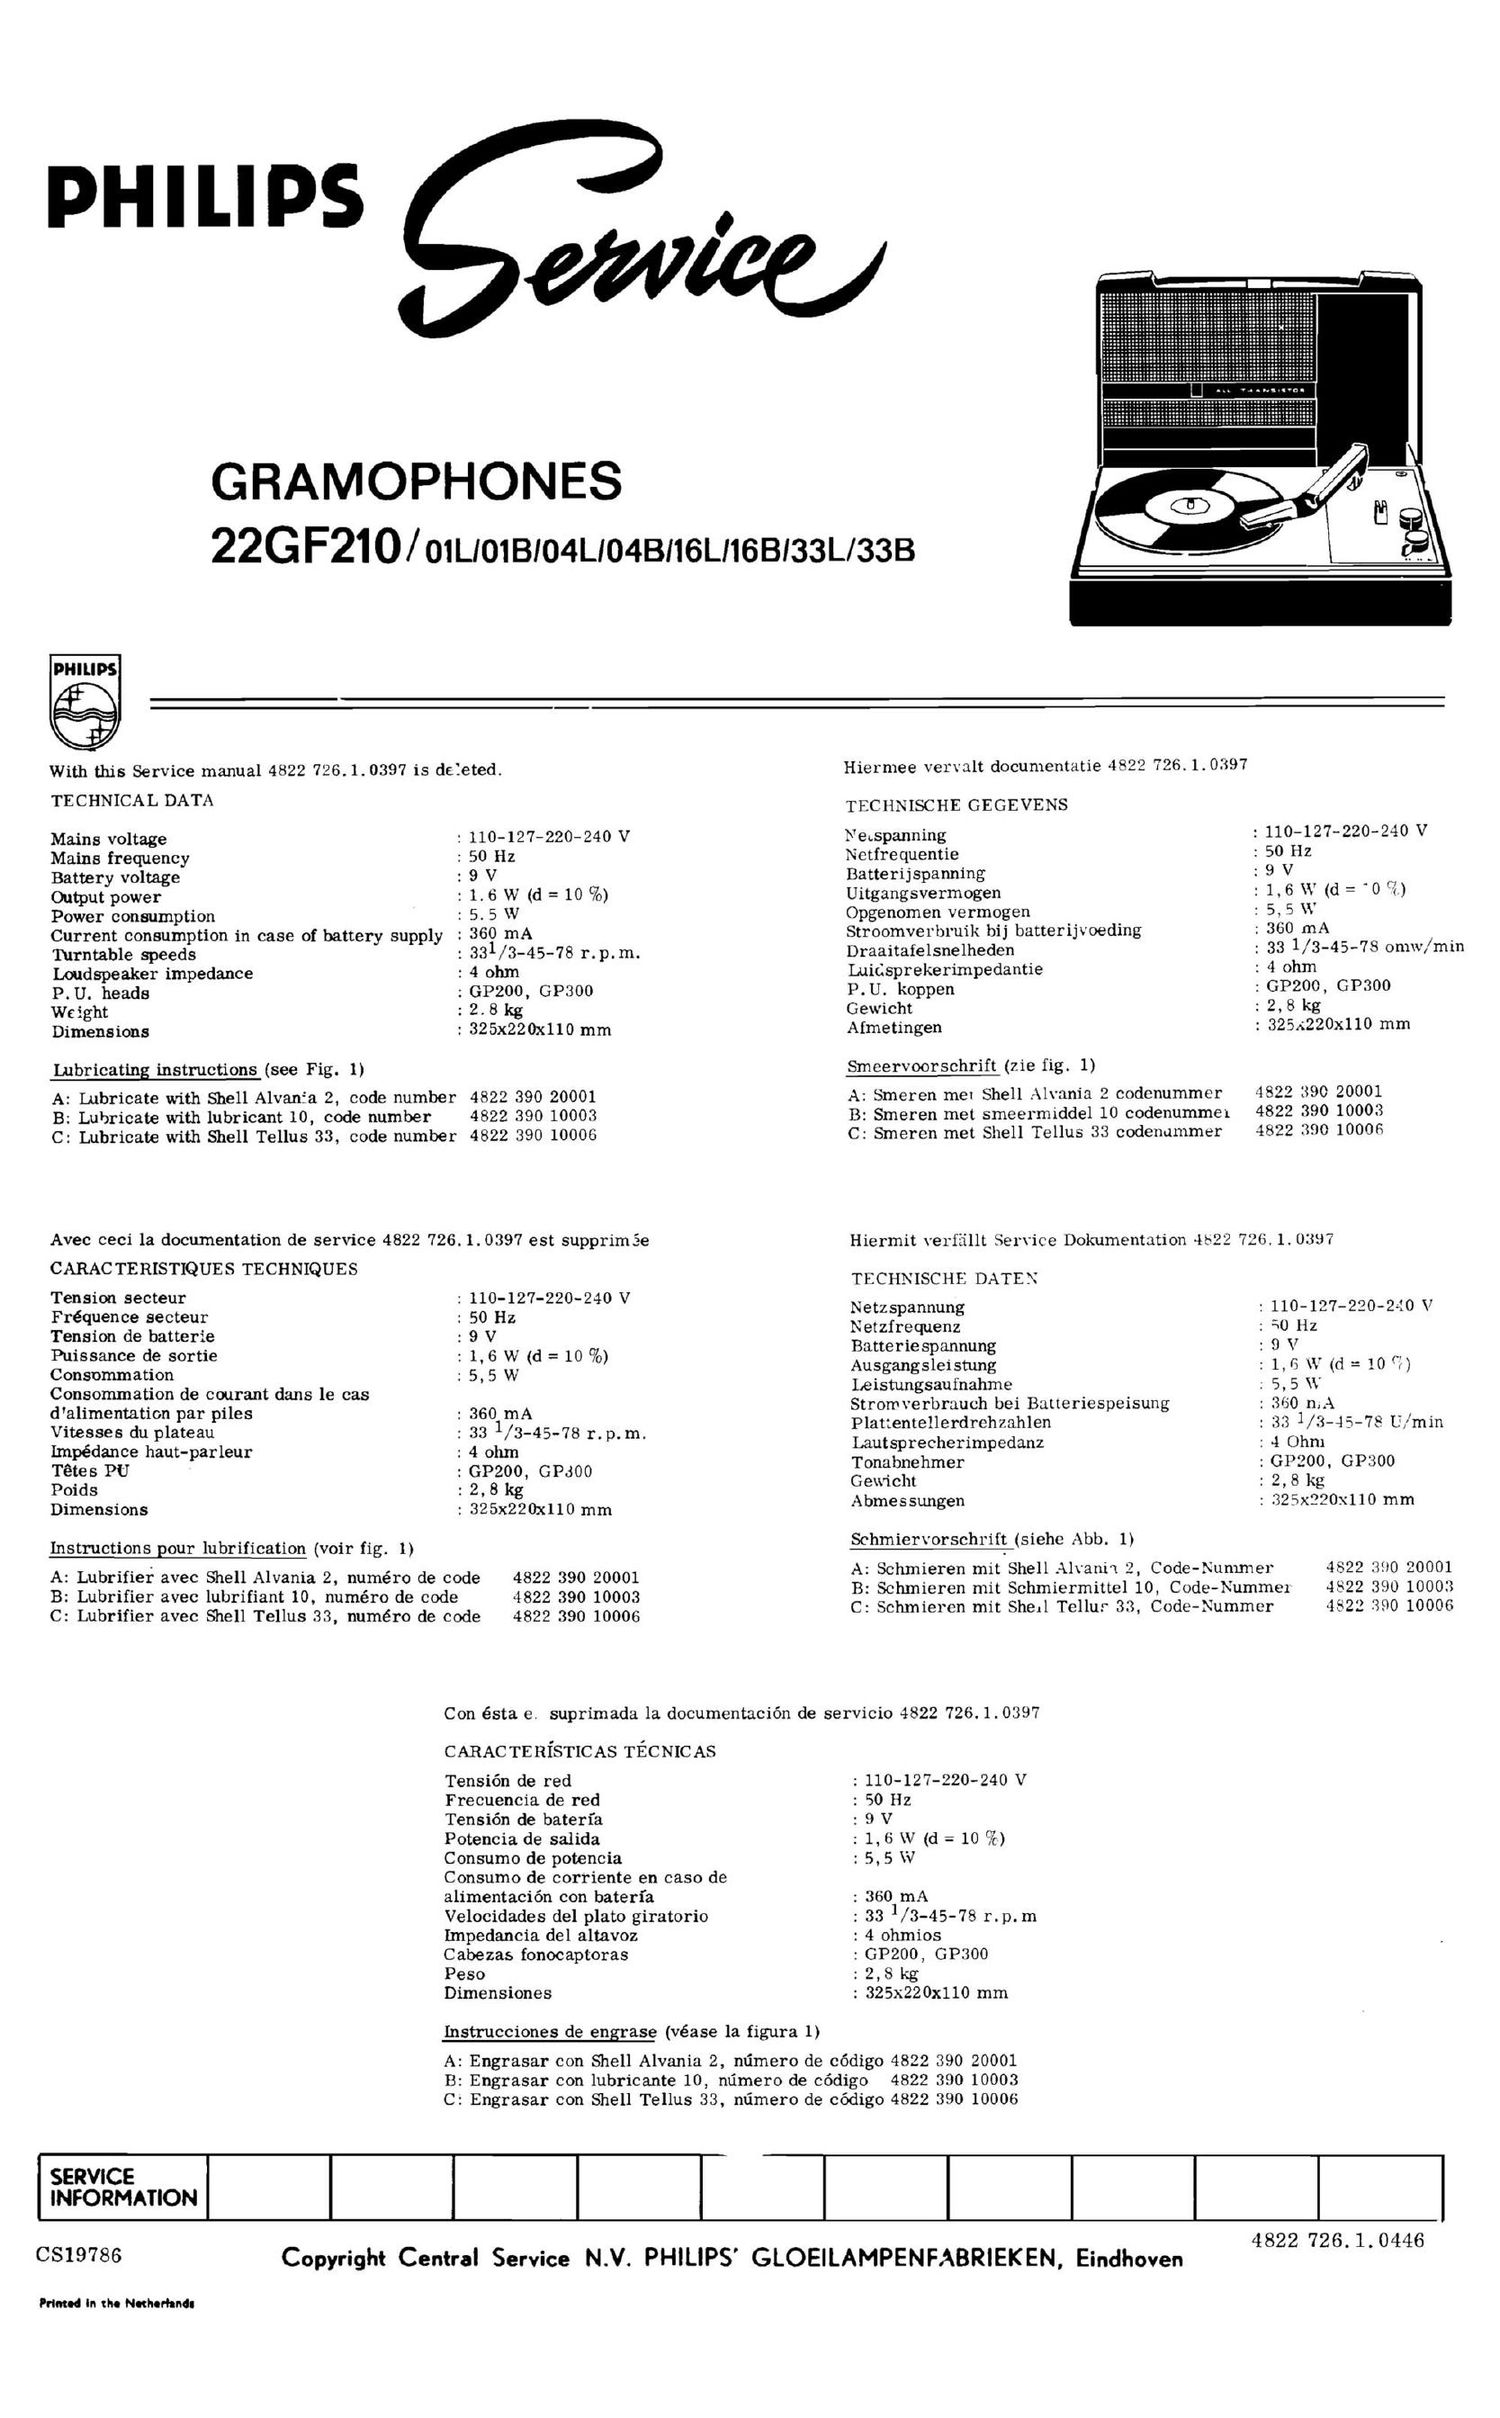 philips gf 210 service manual